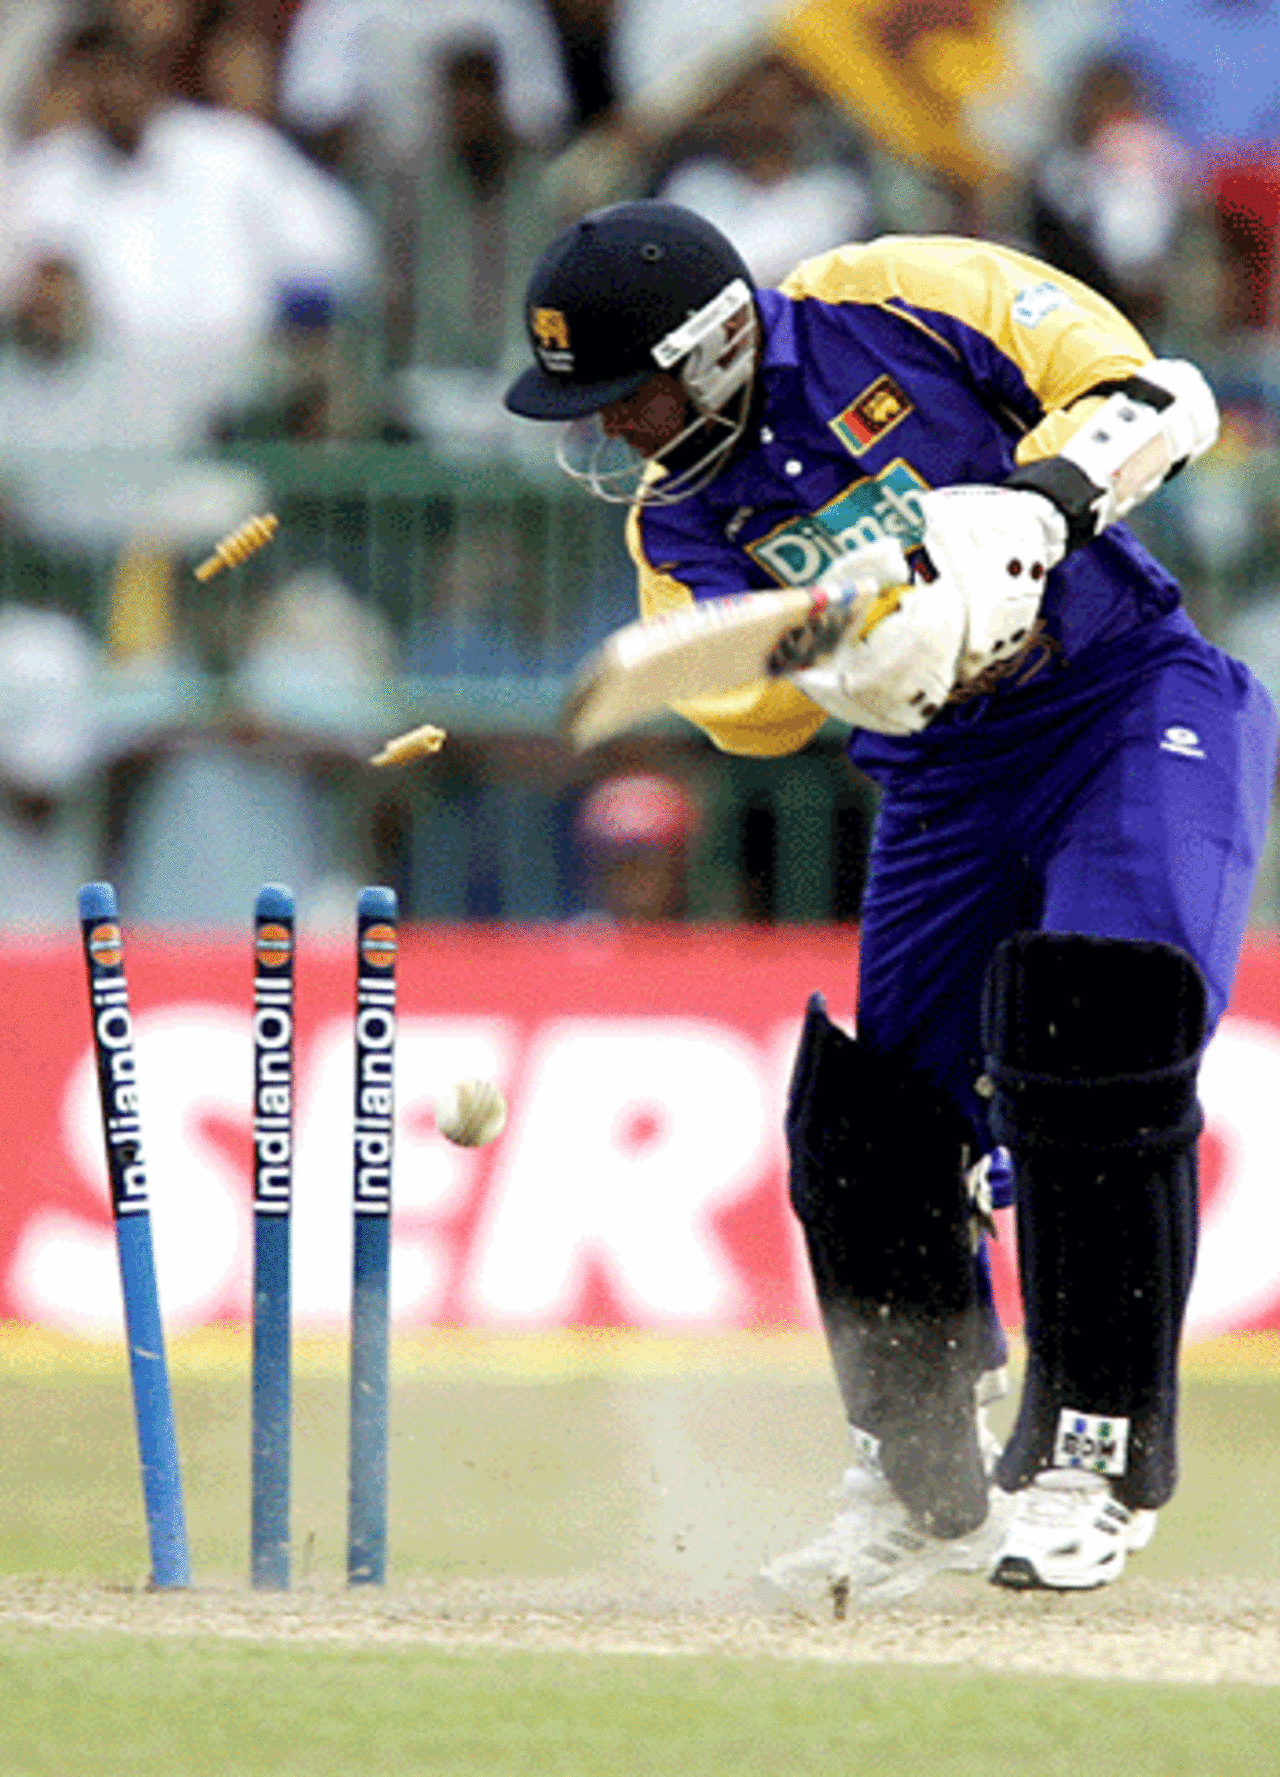 Tillakaratne Dilshan sees his stumps rattled, India v Sri Lanka, Premadasa Stadium, August 9, 2005